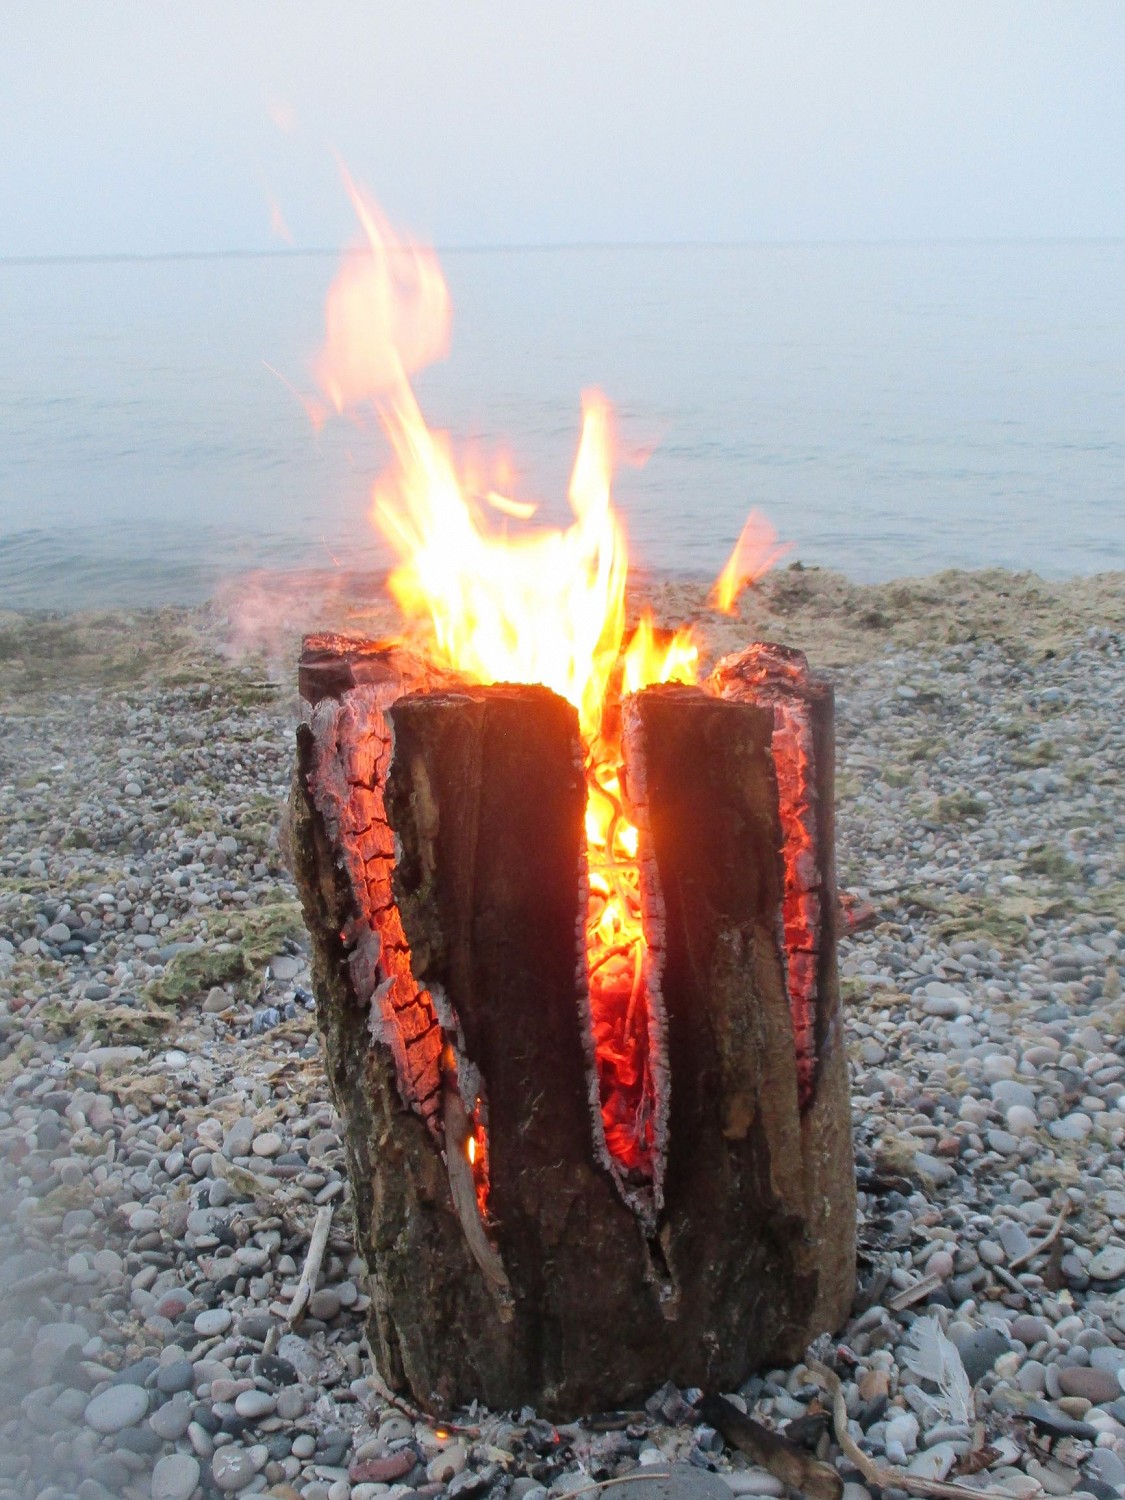 Lake worth beach bonfire homemade images